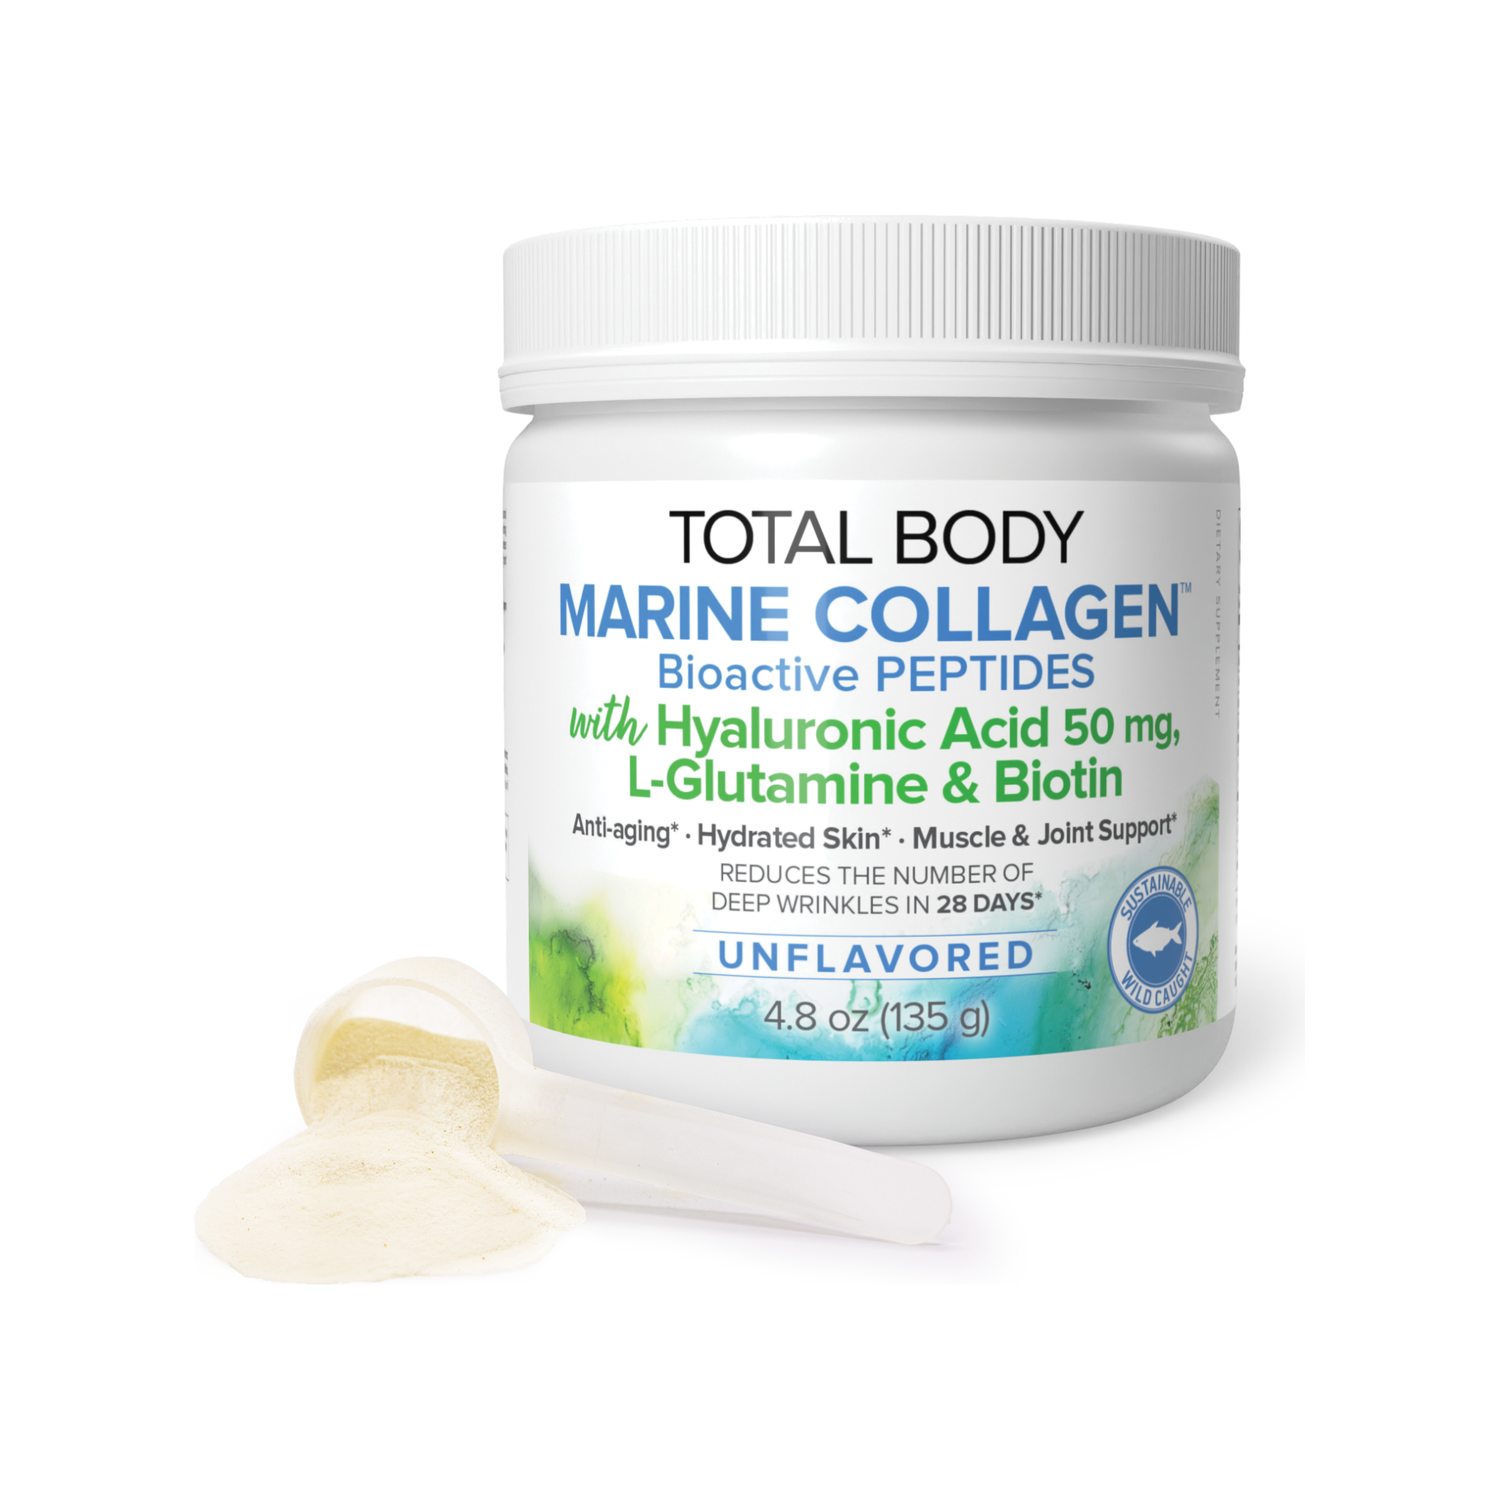 Total Body Marine Collagen™️ Bioactive Peptides Powder for Total Body Collagen |variant|hi-res|2629U